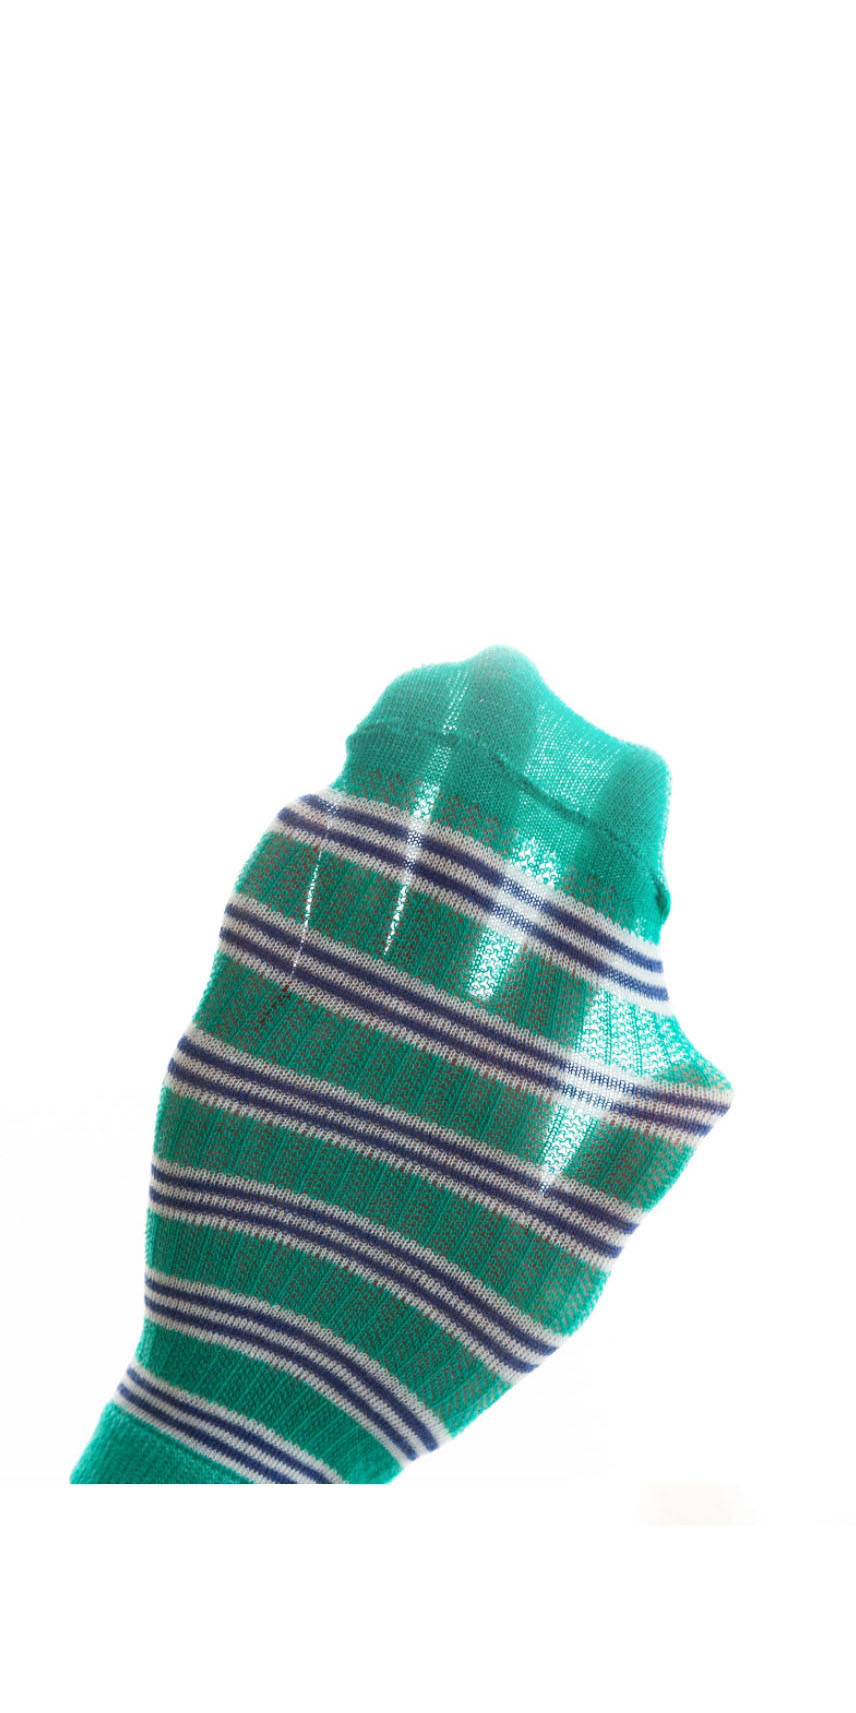 Fashion Smiley Boy [5 Pairs Of Soft And Thin Cotton] Cotton Printed Breathable Mesh Kids Socks,Fashion Socks